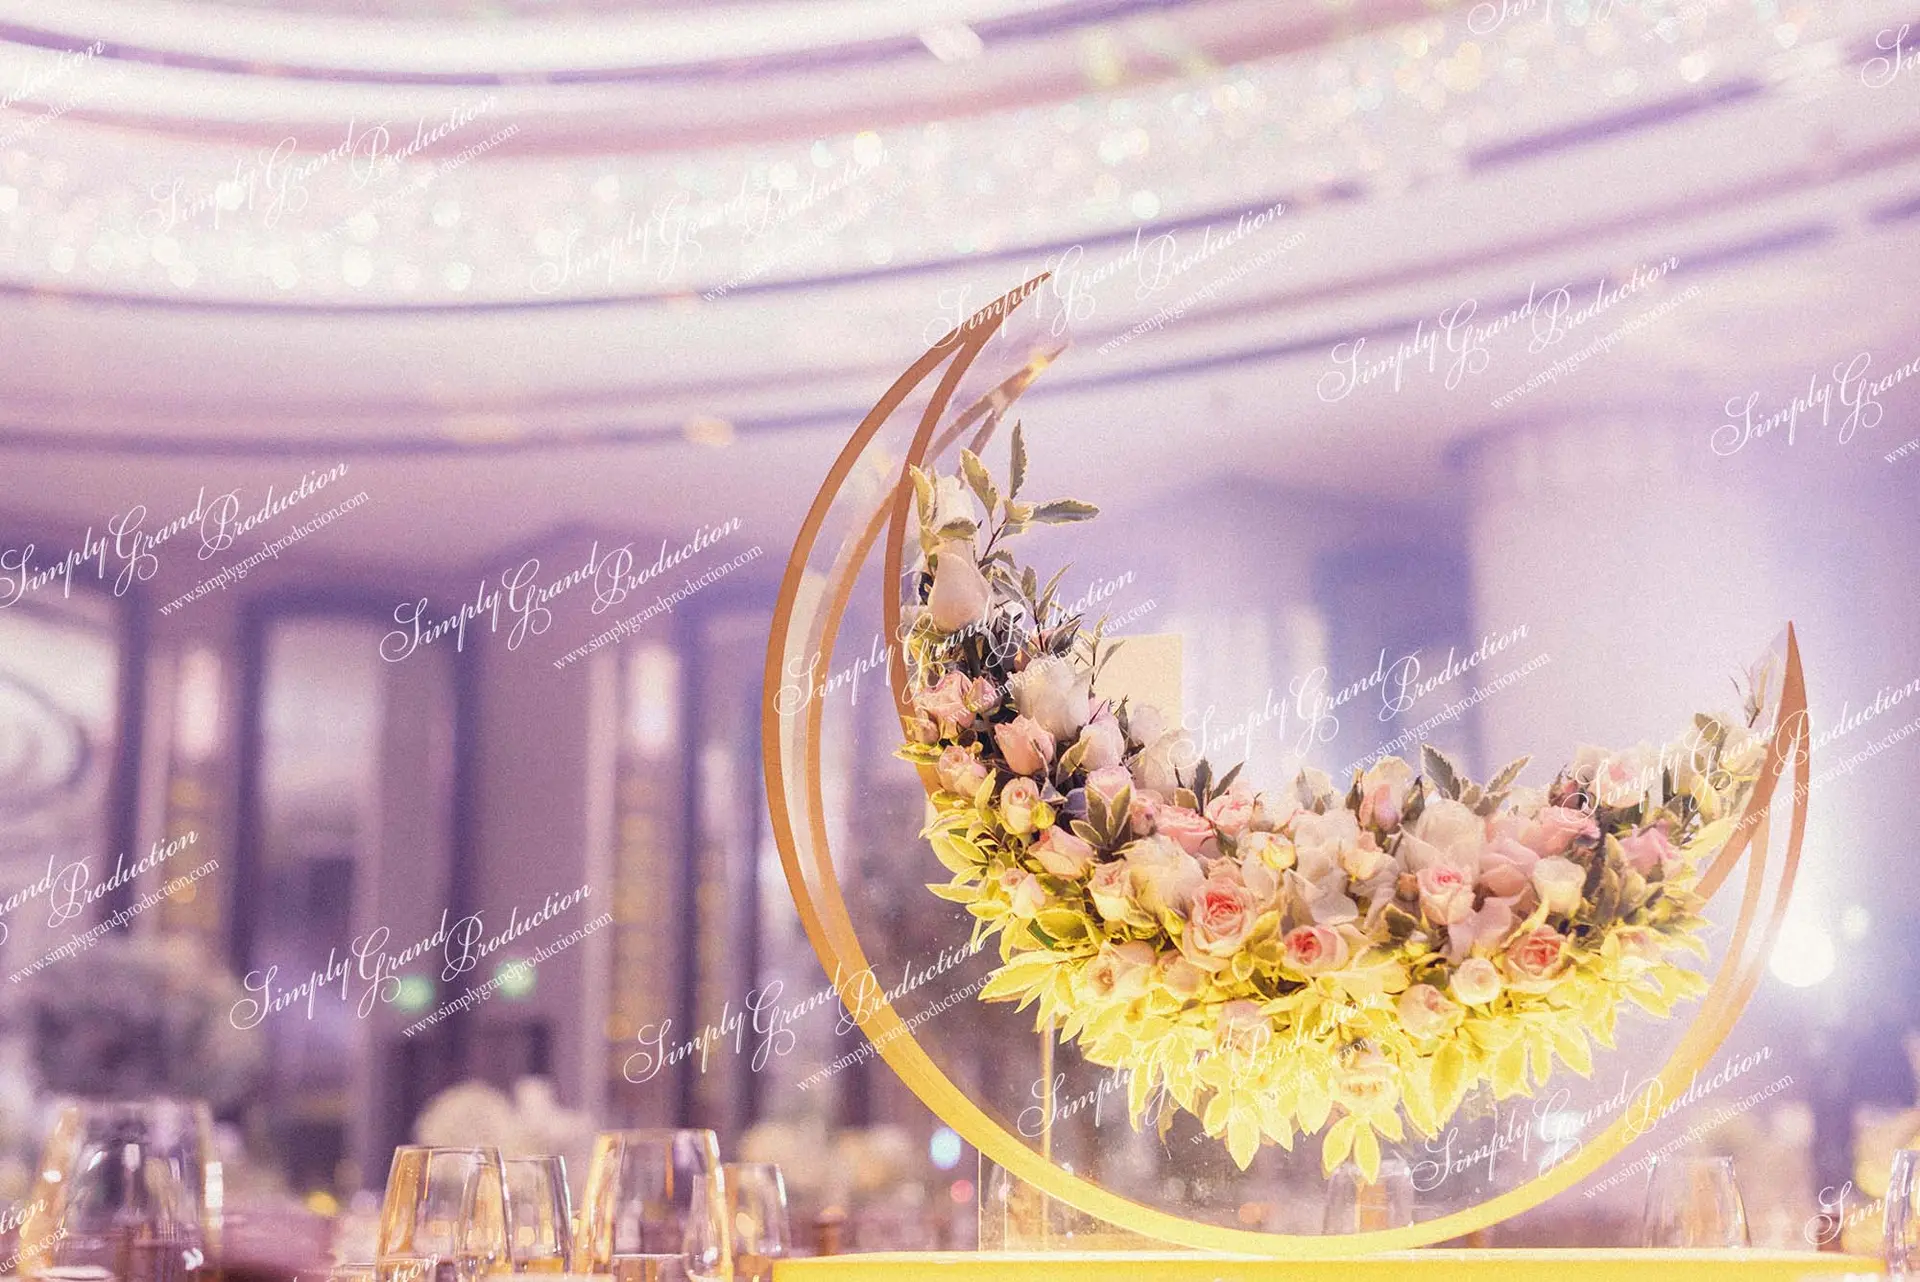 Simply_Grand_Production_Ballroom_wedding_decoration_moon_centerpiece_romantic_glamorous_Grand_Hyatt_3_2_wm